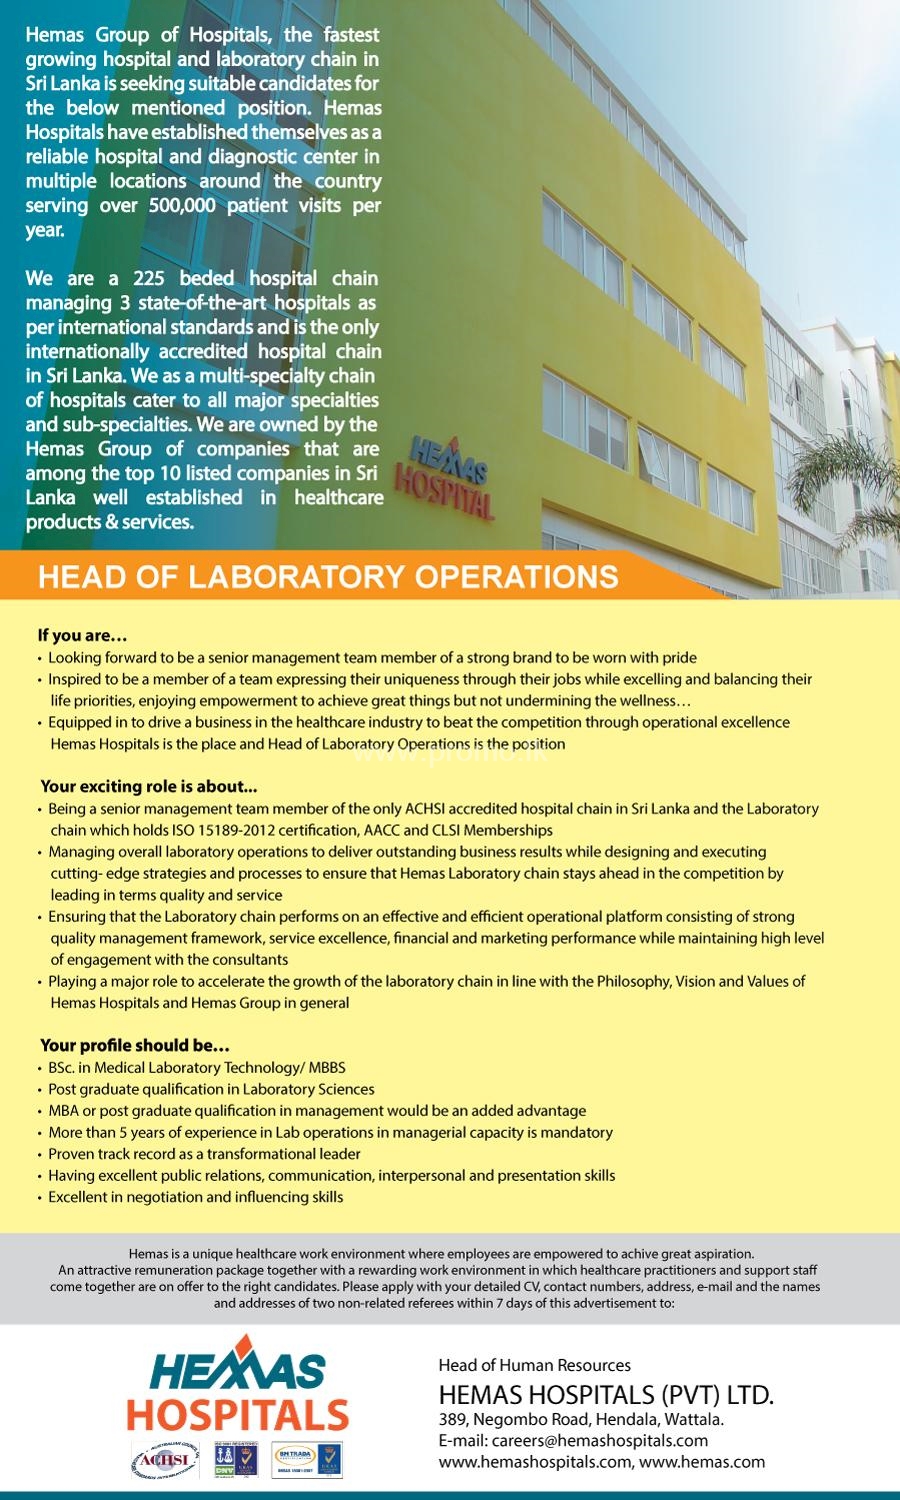 Head of Laboratory Operations